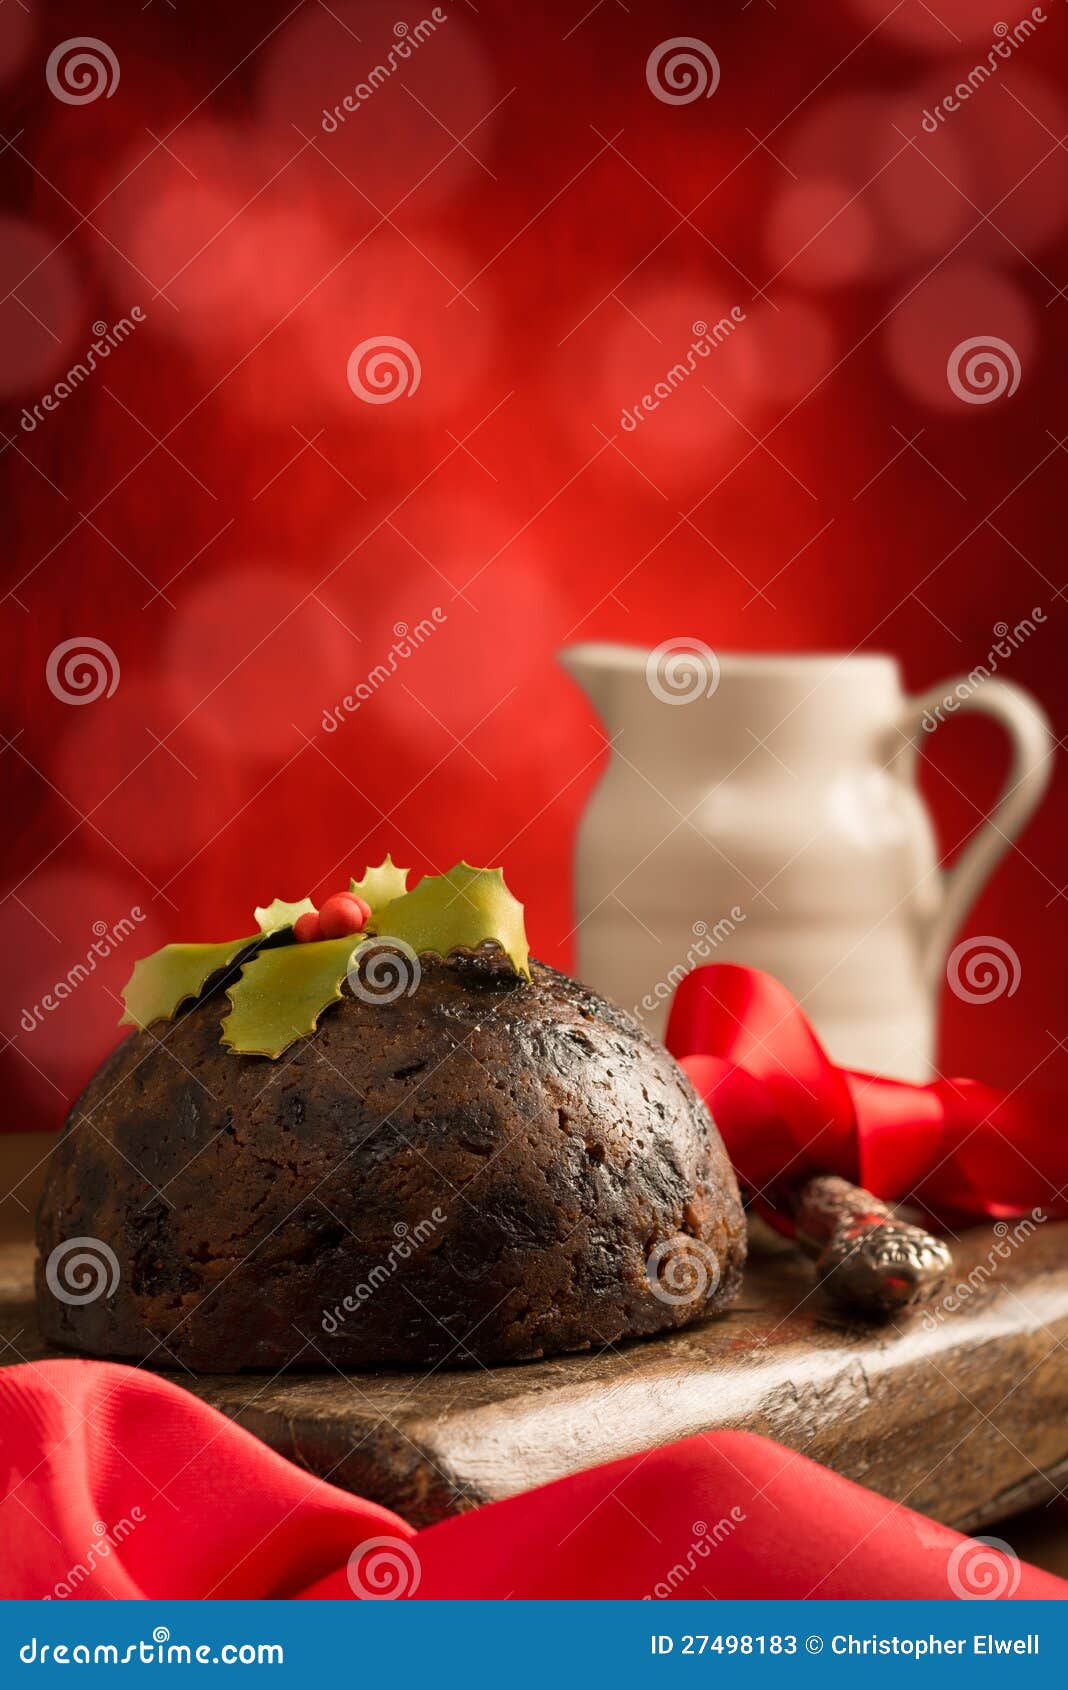 Christmas Pudding stock image. Image of scene, pudding - 27498183